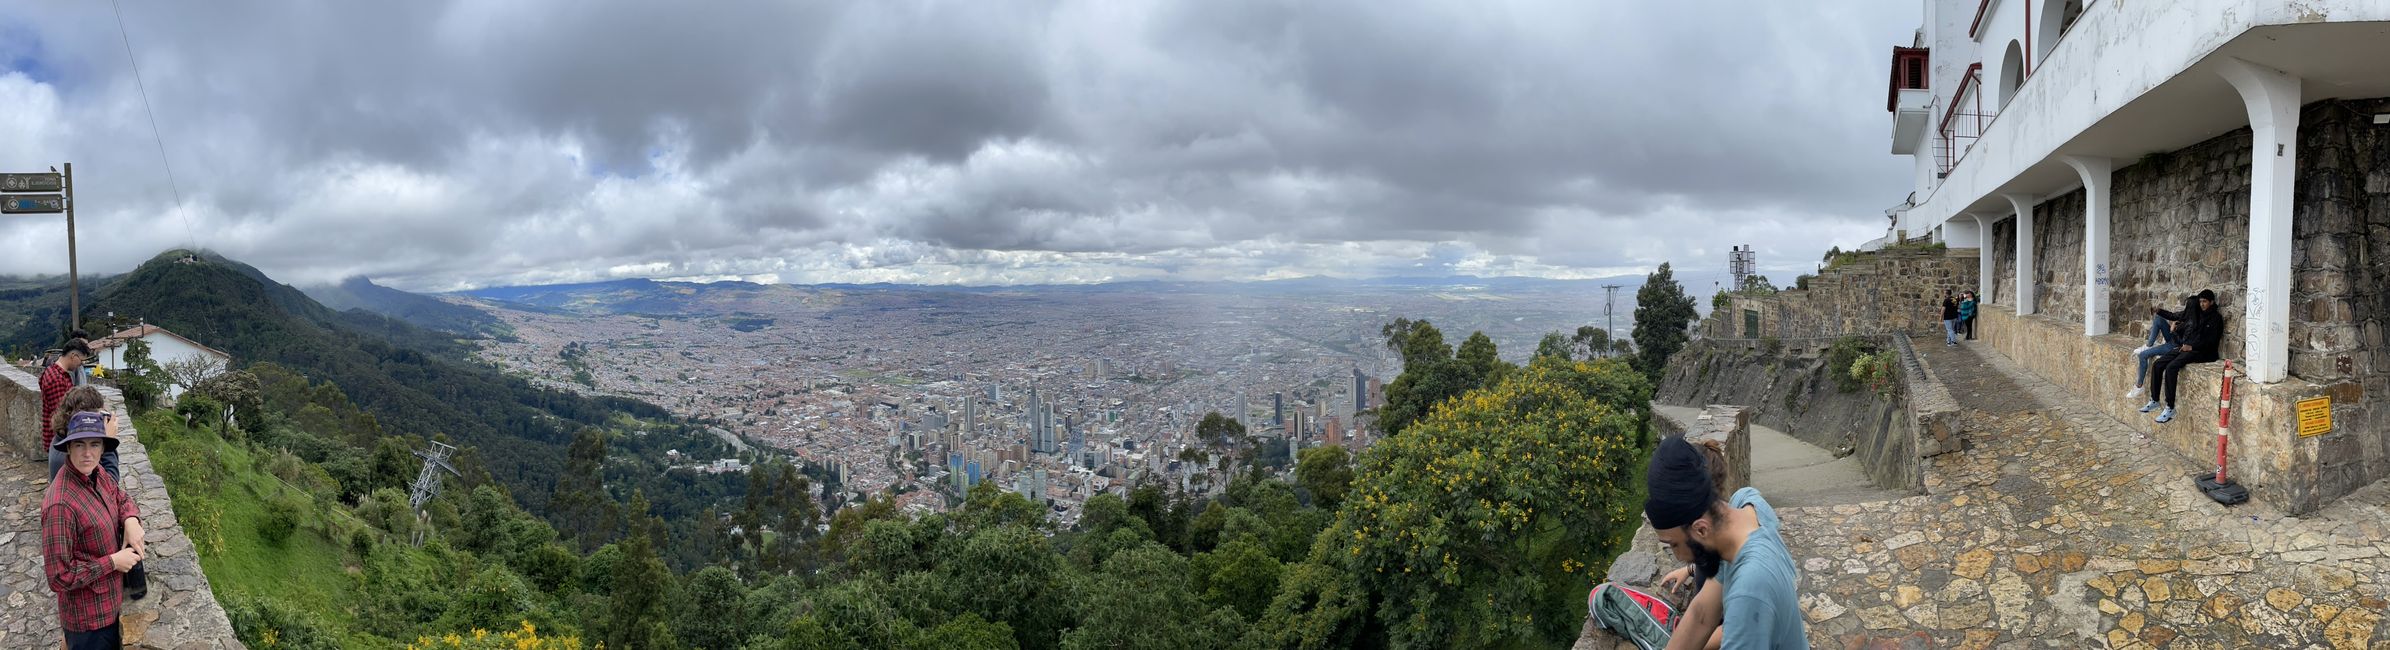 View of Bogotá